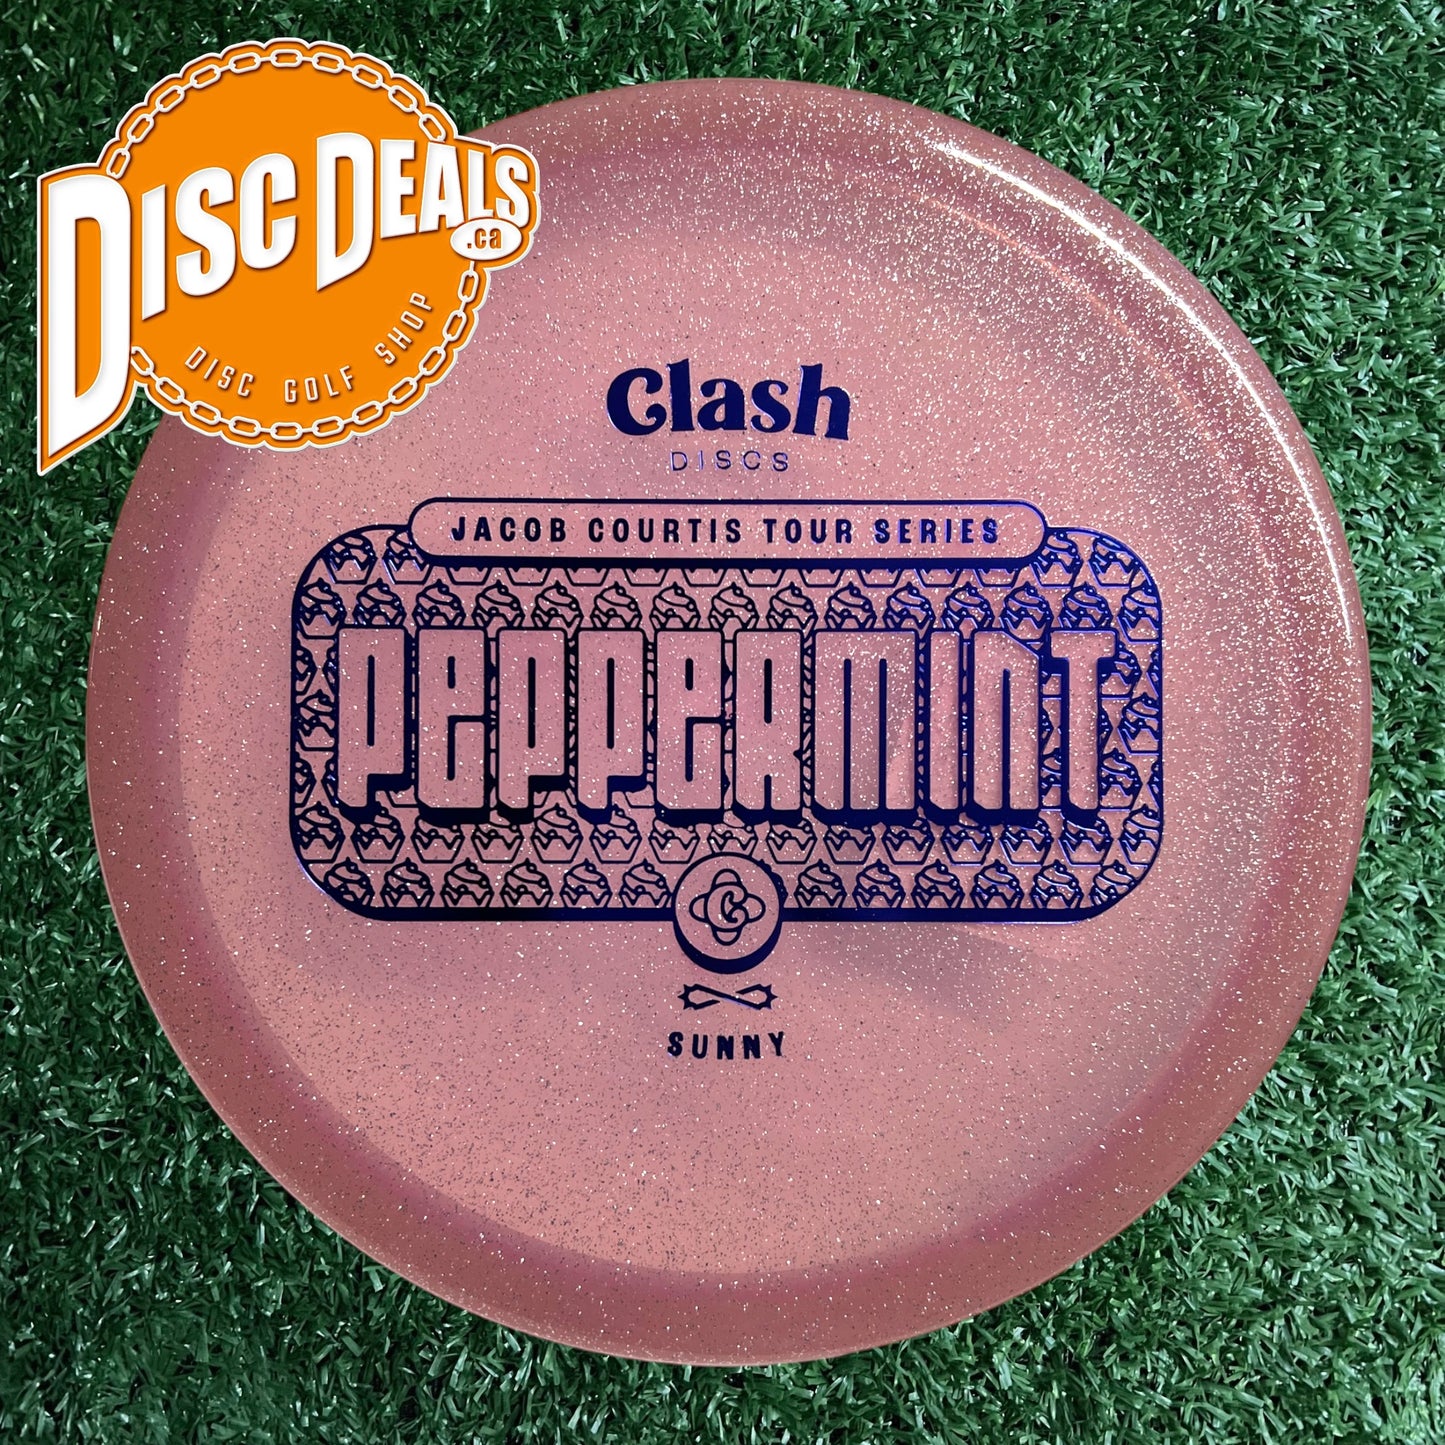 Clash Discs Peppermint - Sunny - Jacob Courtis Tour Series